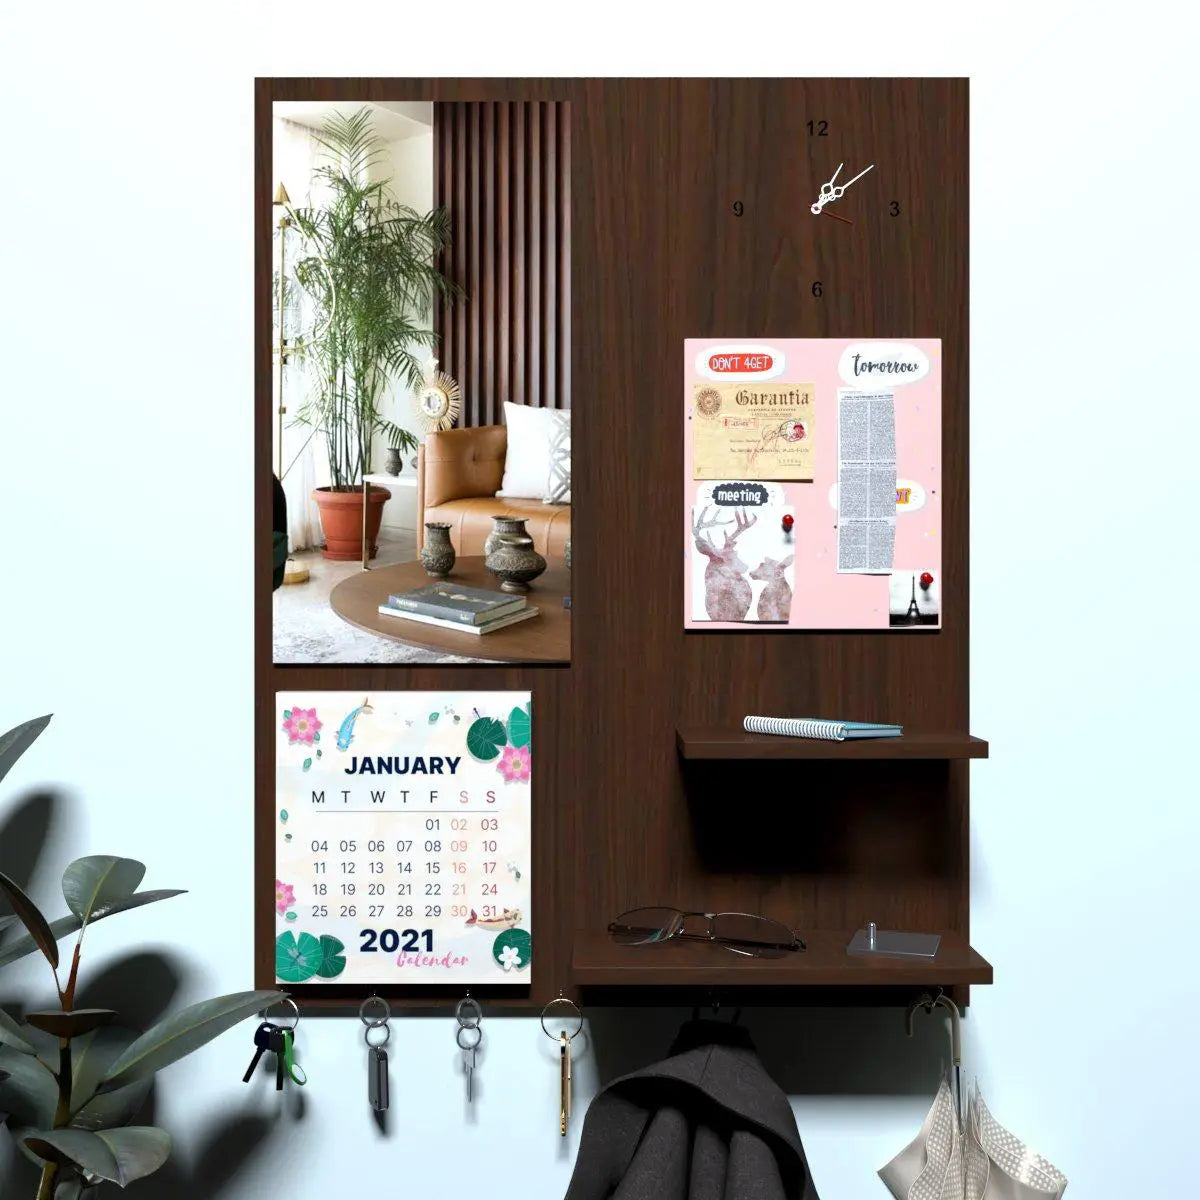 Beautiful (7 In One)' Wooden Wall Organiser With Mirror, Key hangers, Coat Hangers, Pin Board, Clock, Calendar